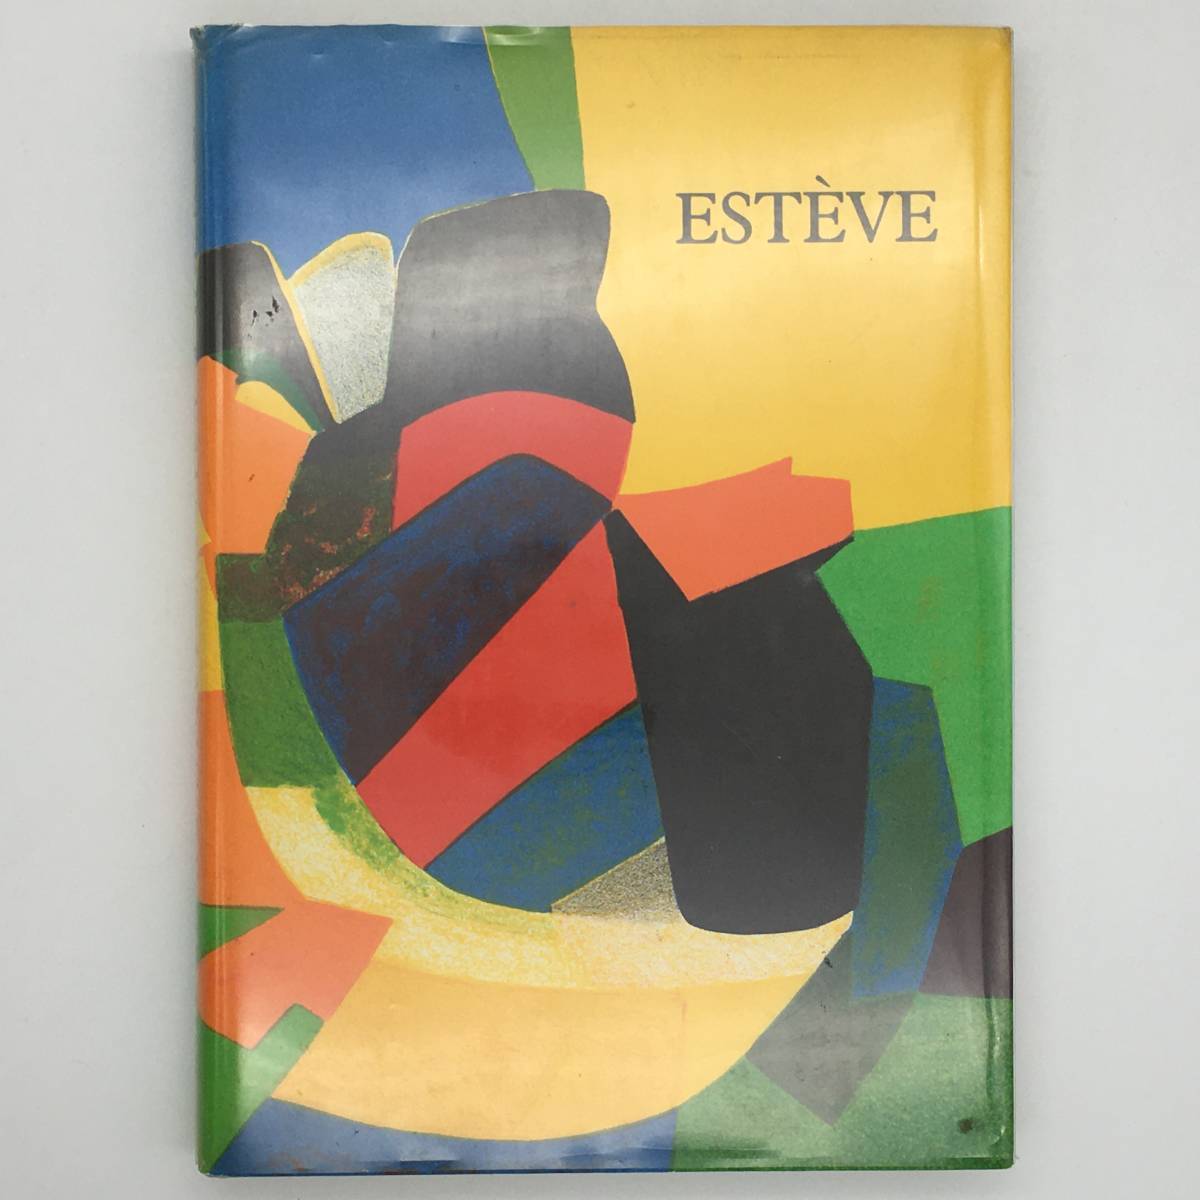 [Raisonné] 석판화 1 장 포함 Maurice Esteve Maurice Esteve : L'oeuvre Grave 1986 전 Robert de Launay 조수 추상화, 그림, 그림책, 수집, 완전한 작품, 카탈로그 레조네